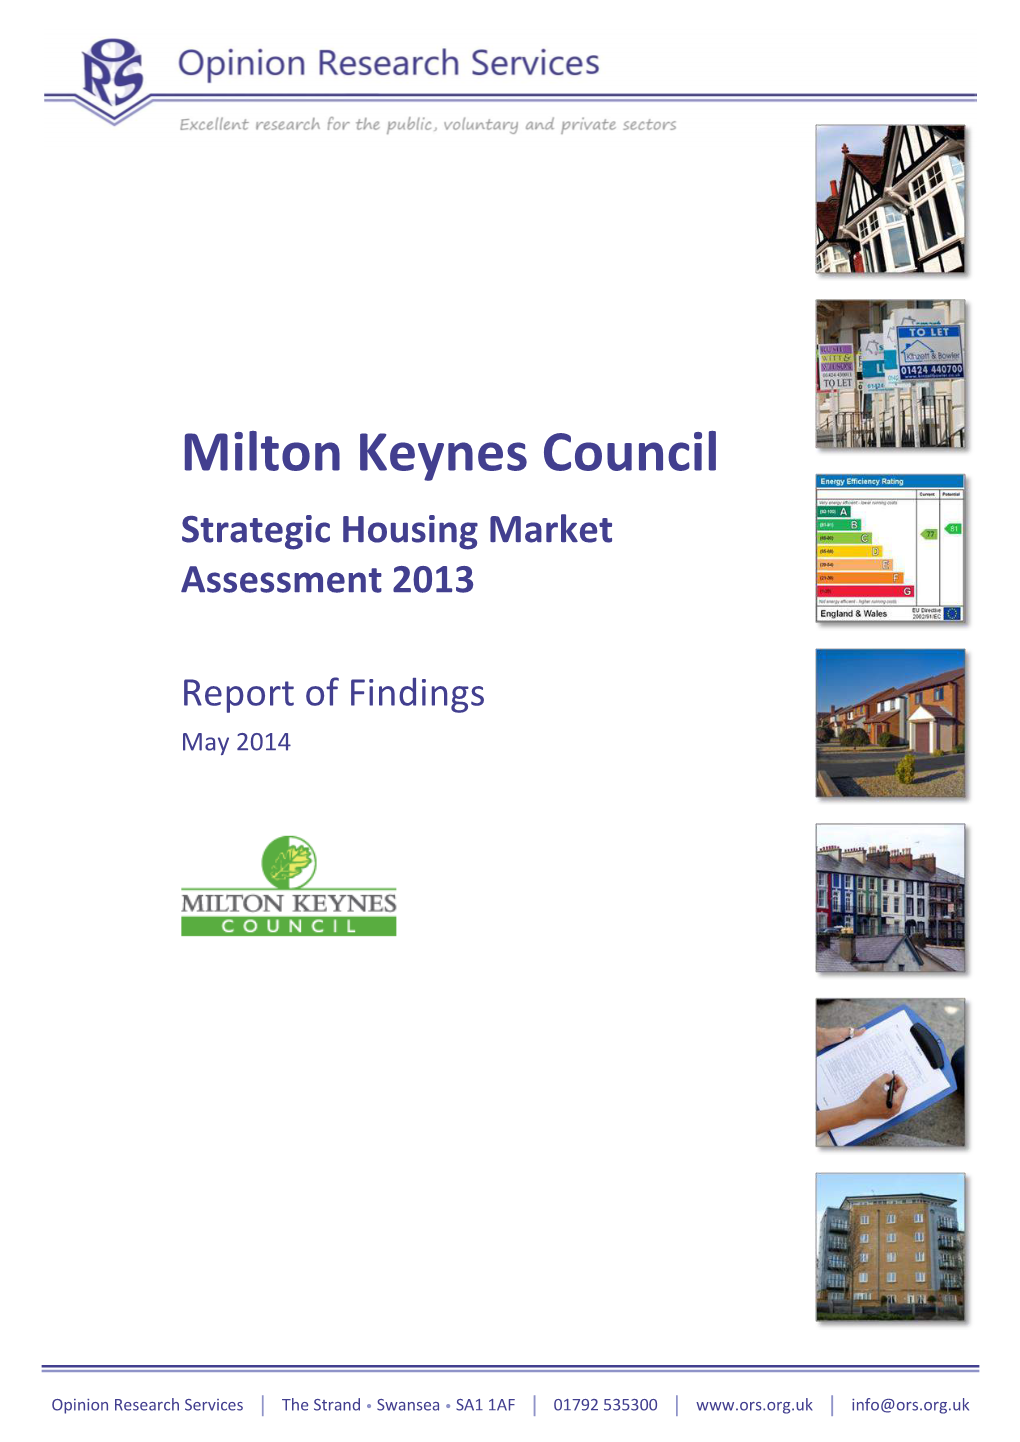 Milton Keynes Council Strategic Housing Market Assessment 2013